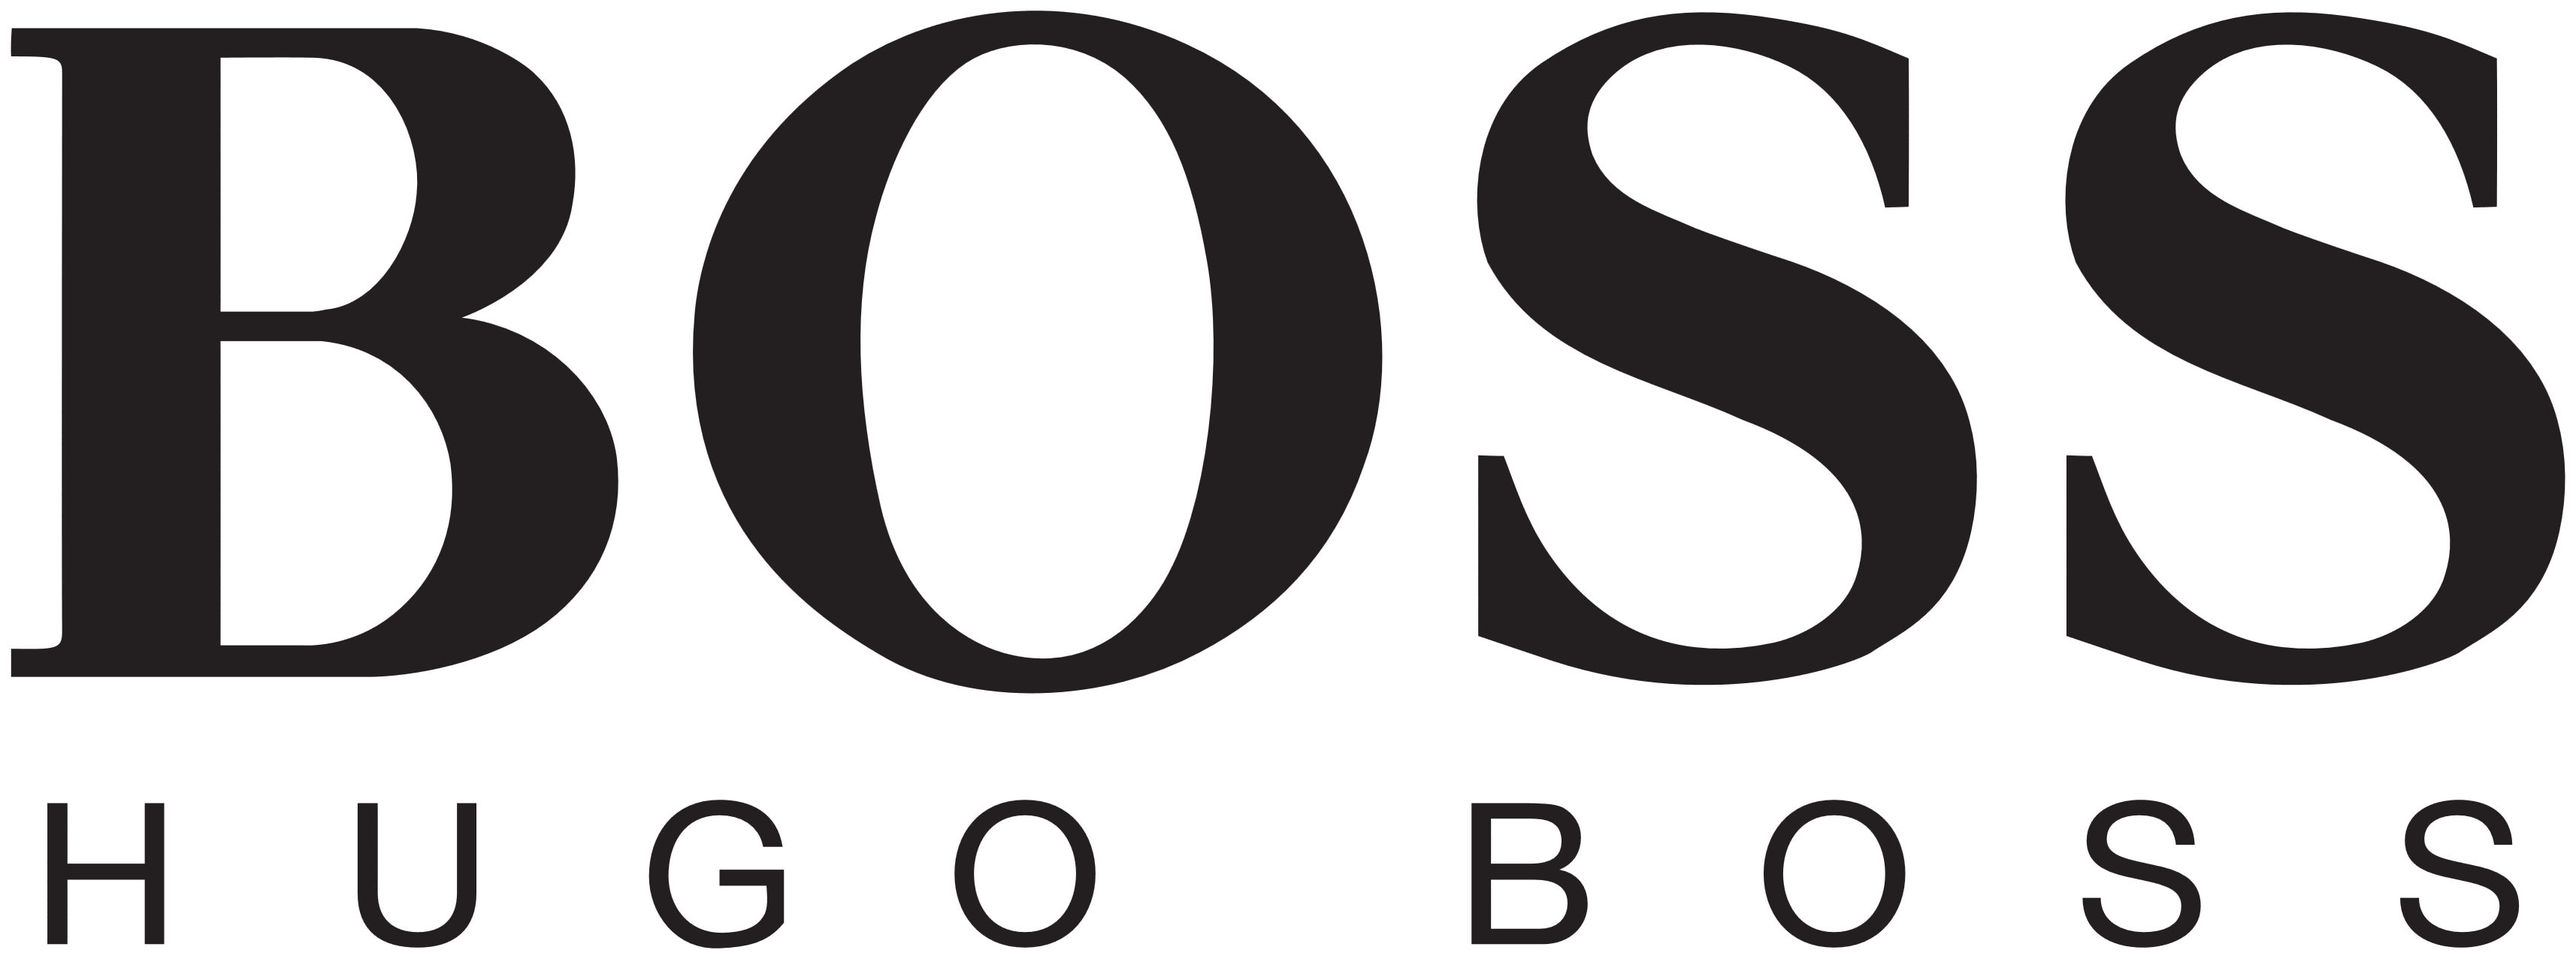 Hugo Boss Logos Download